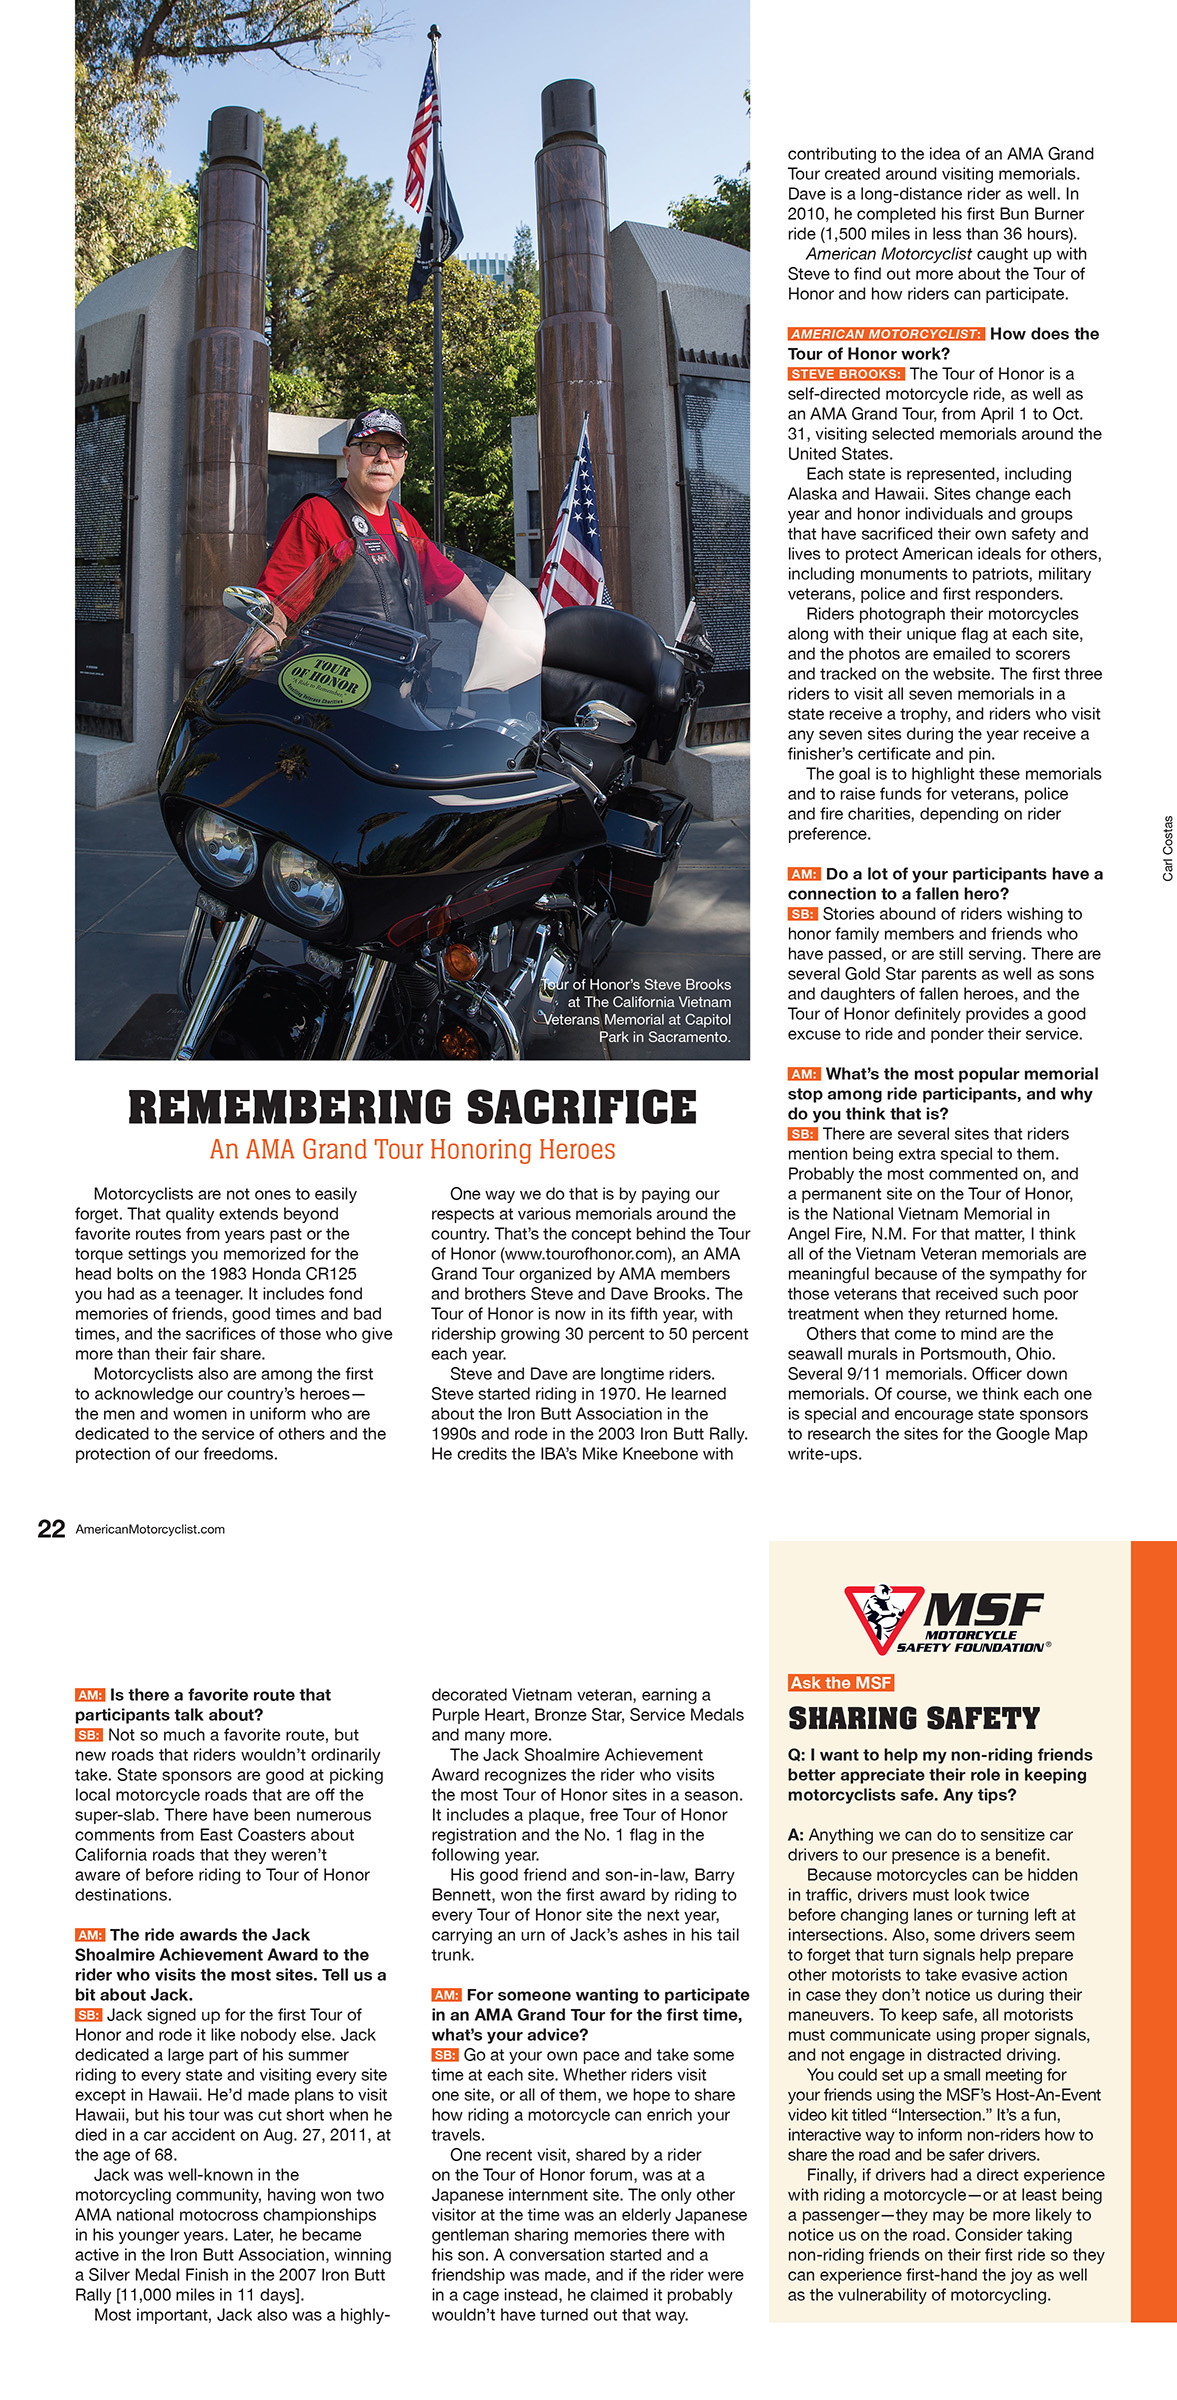 American Motorcyclist Magazine article